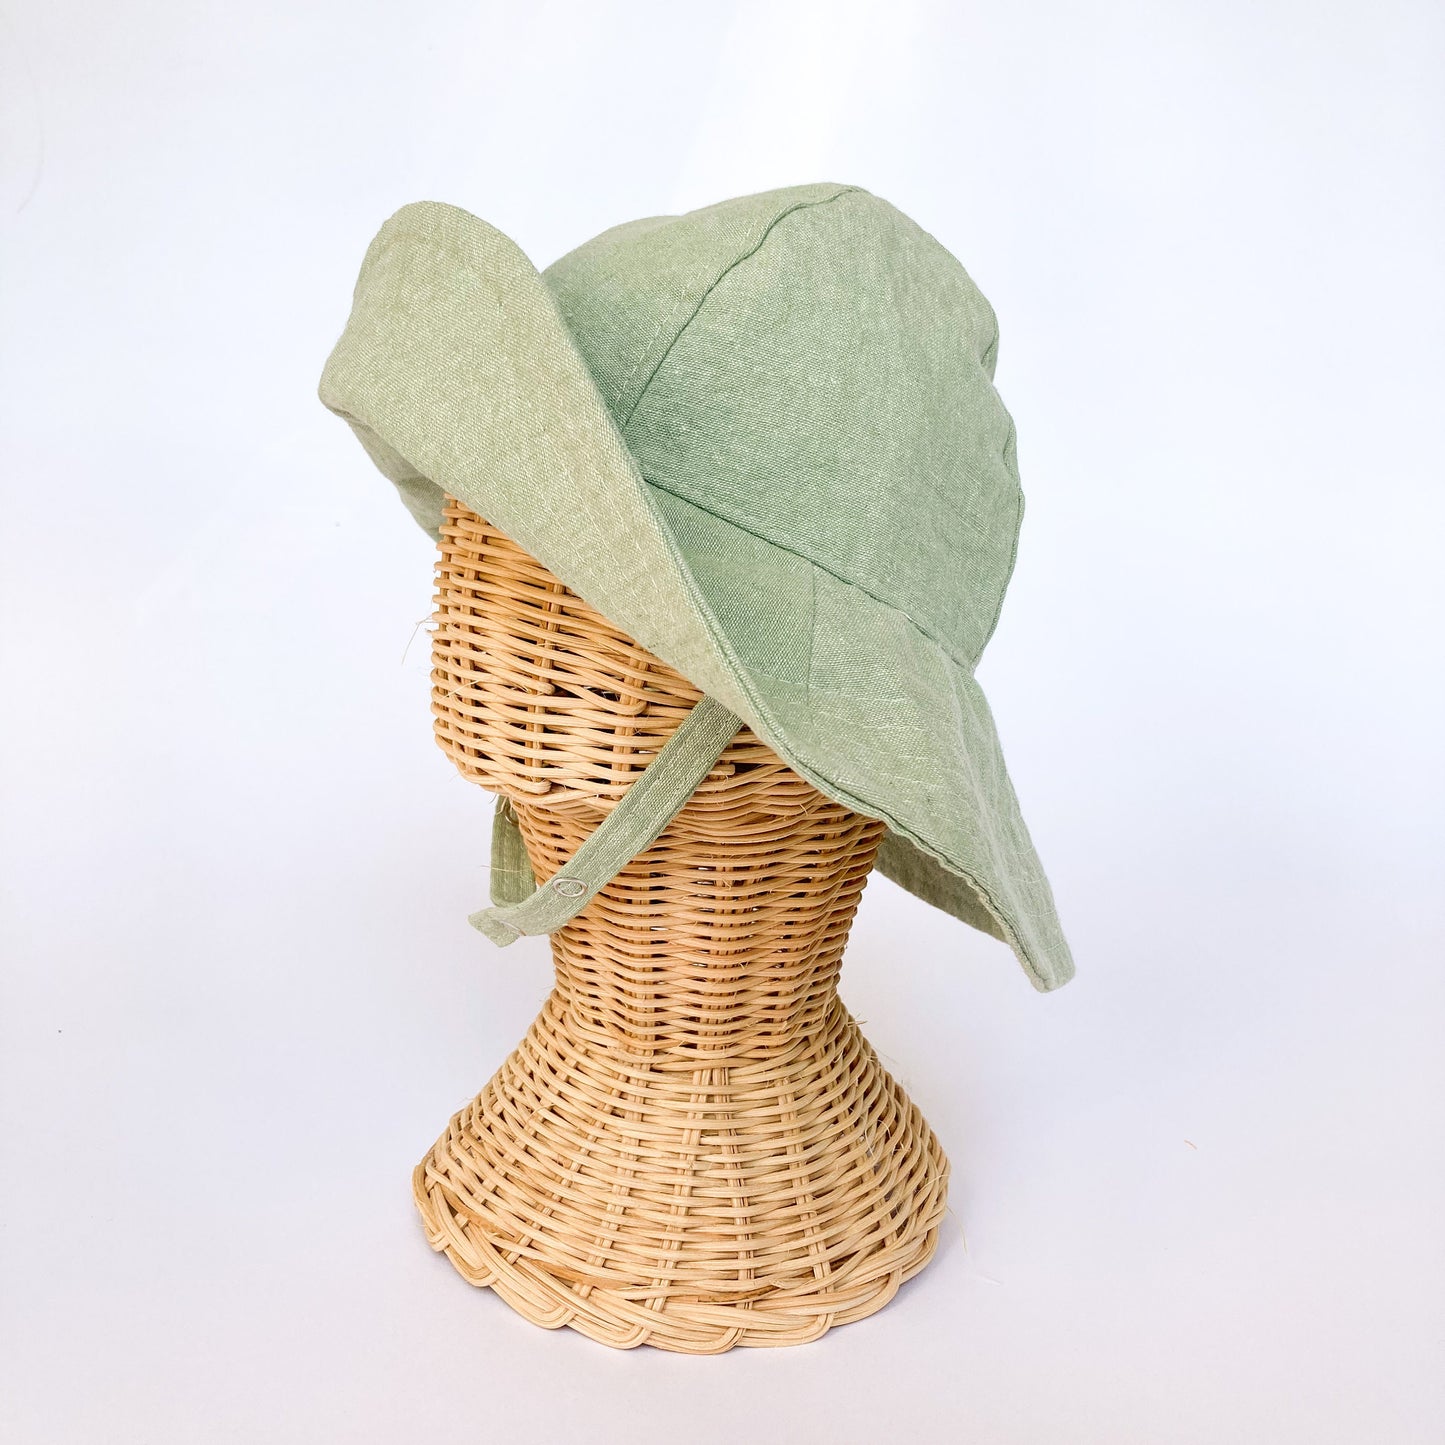 Mint Green Hat for Baby, Baby Sun Hat, Kids Summer Hat, Floppy Beach Hat, Linen Sun Hat